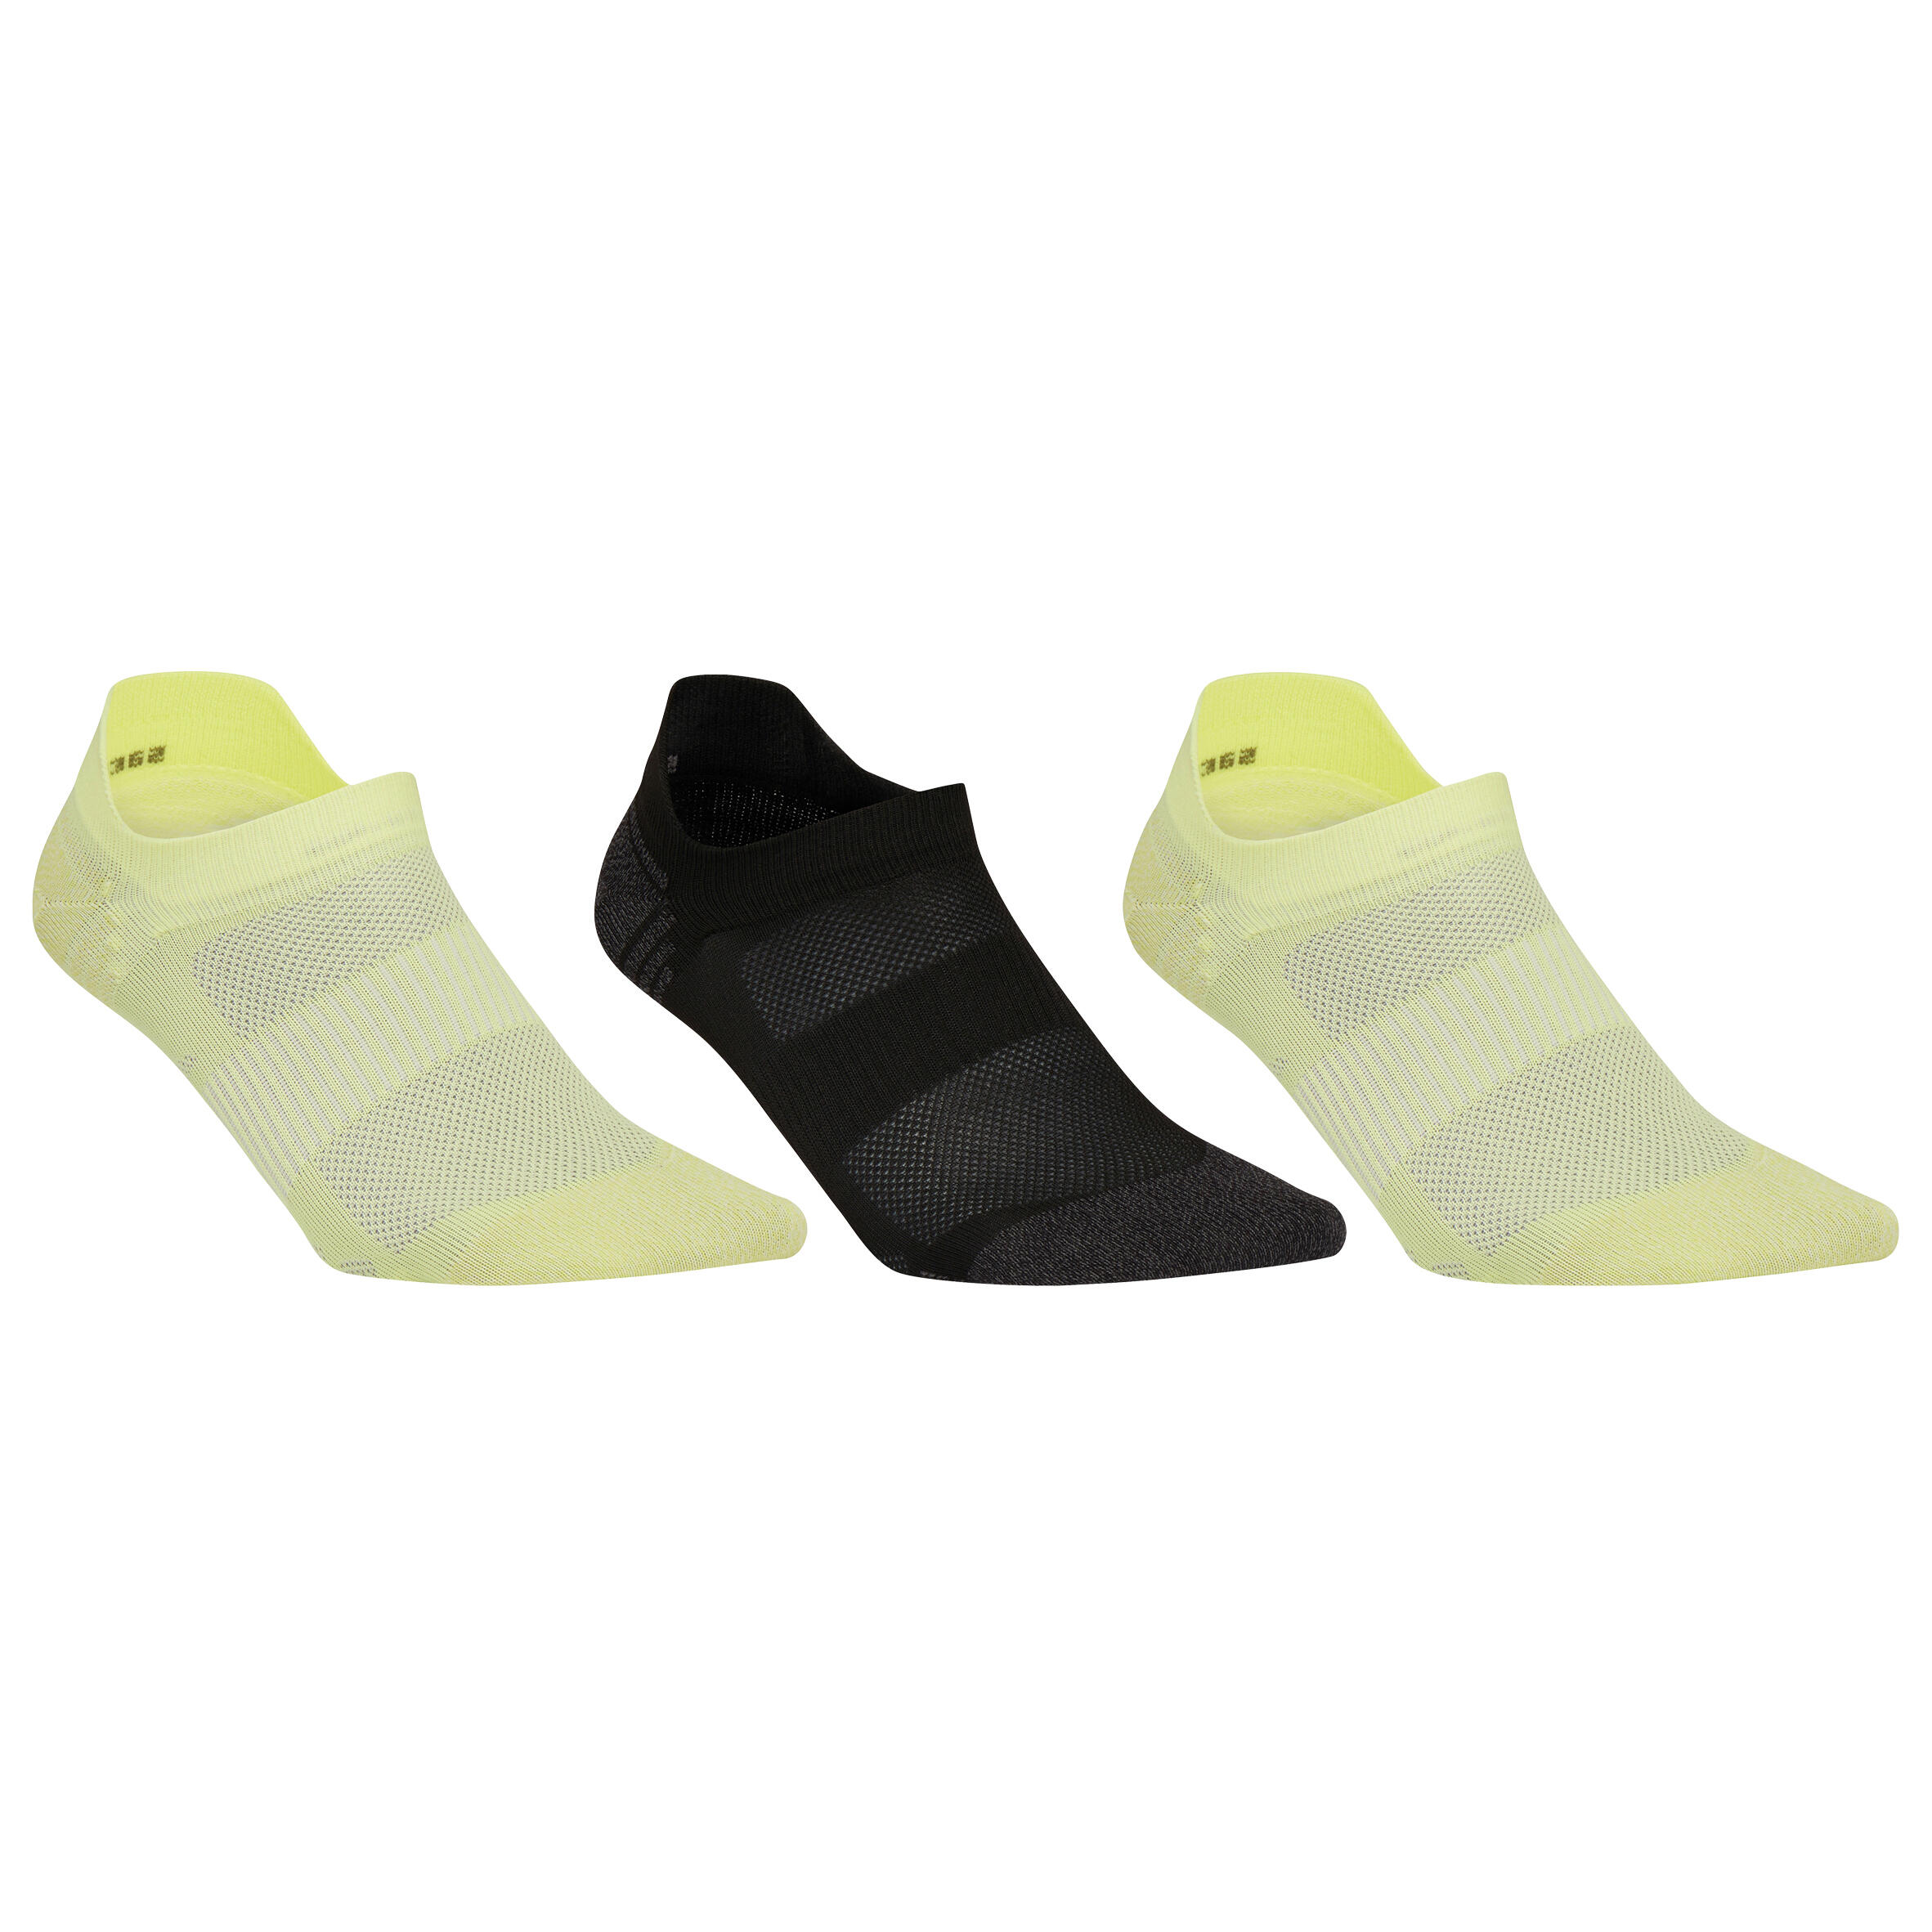 NEWFEEL WS 500 Invisible Fresh Active and Nordic Walking Socks - Yellow/Black/Yellow